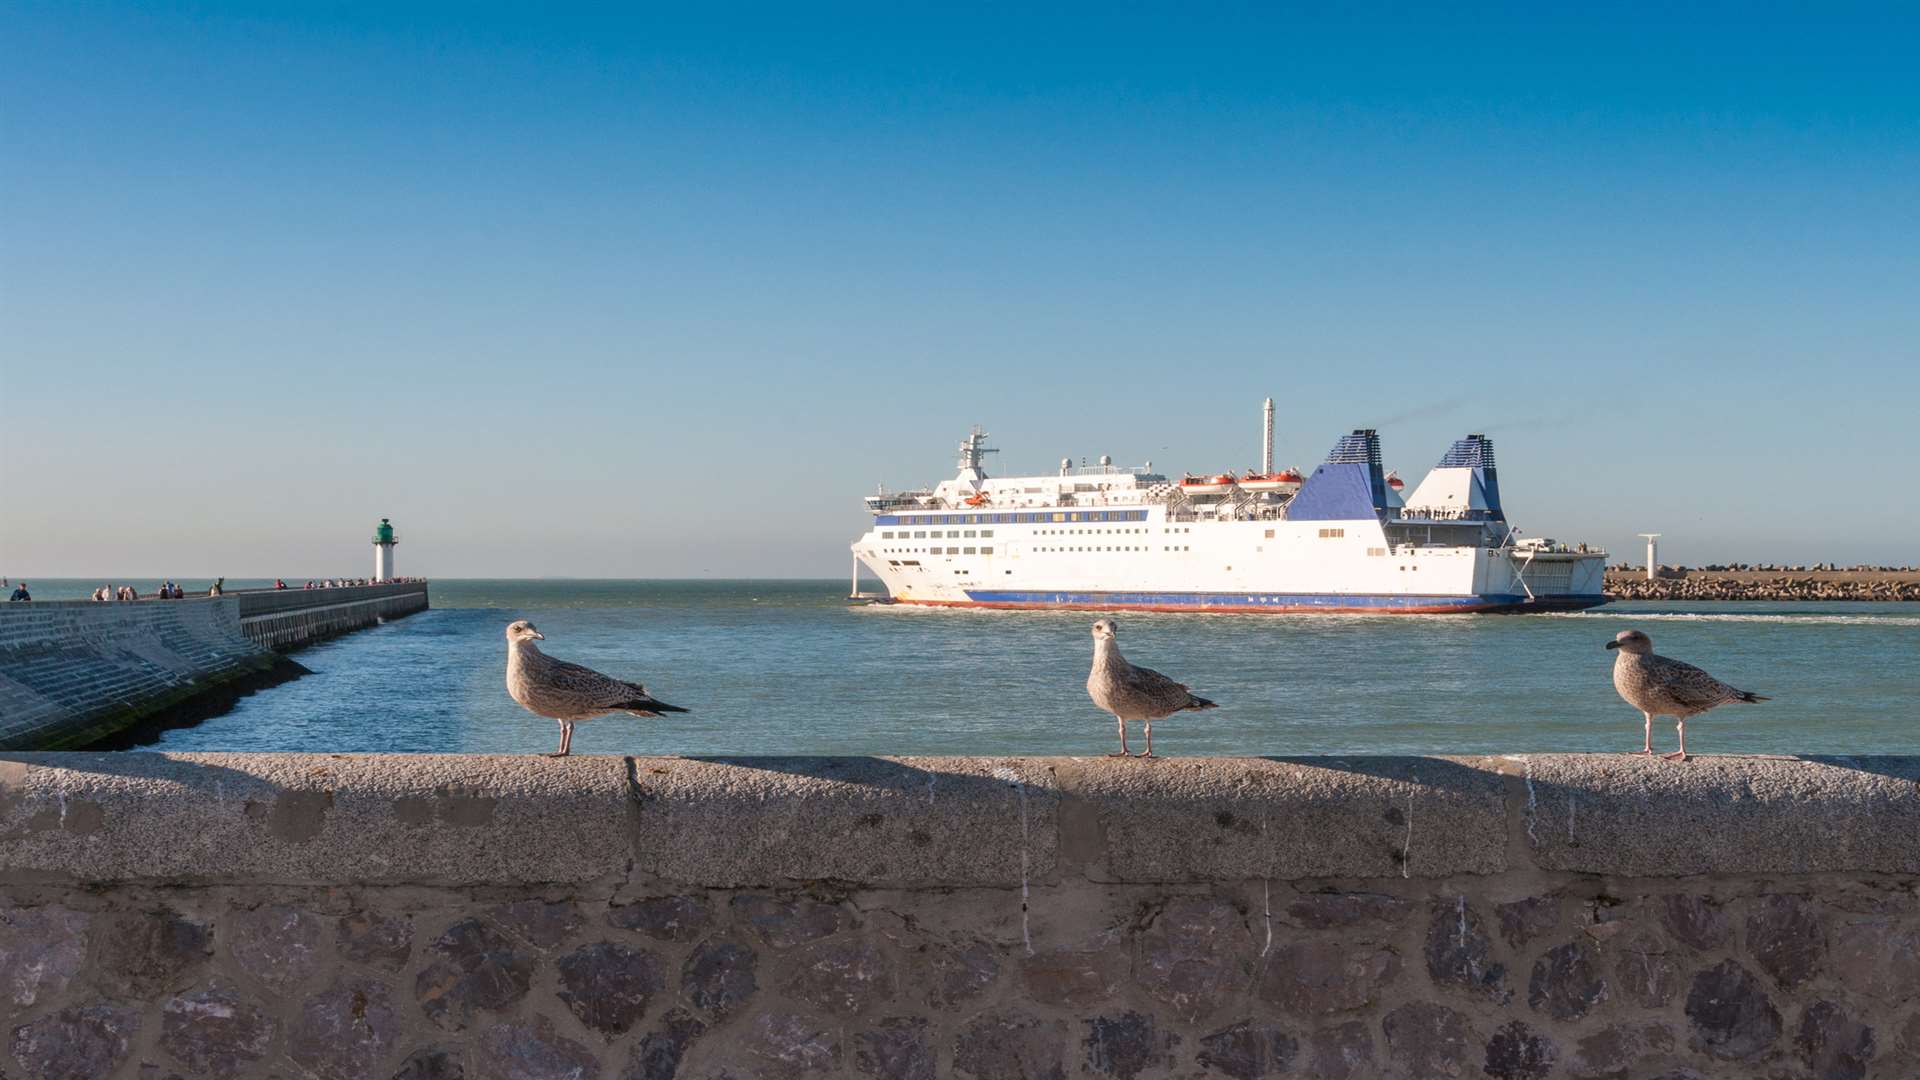 Calais is just a short ferry ride from kent